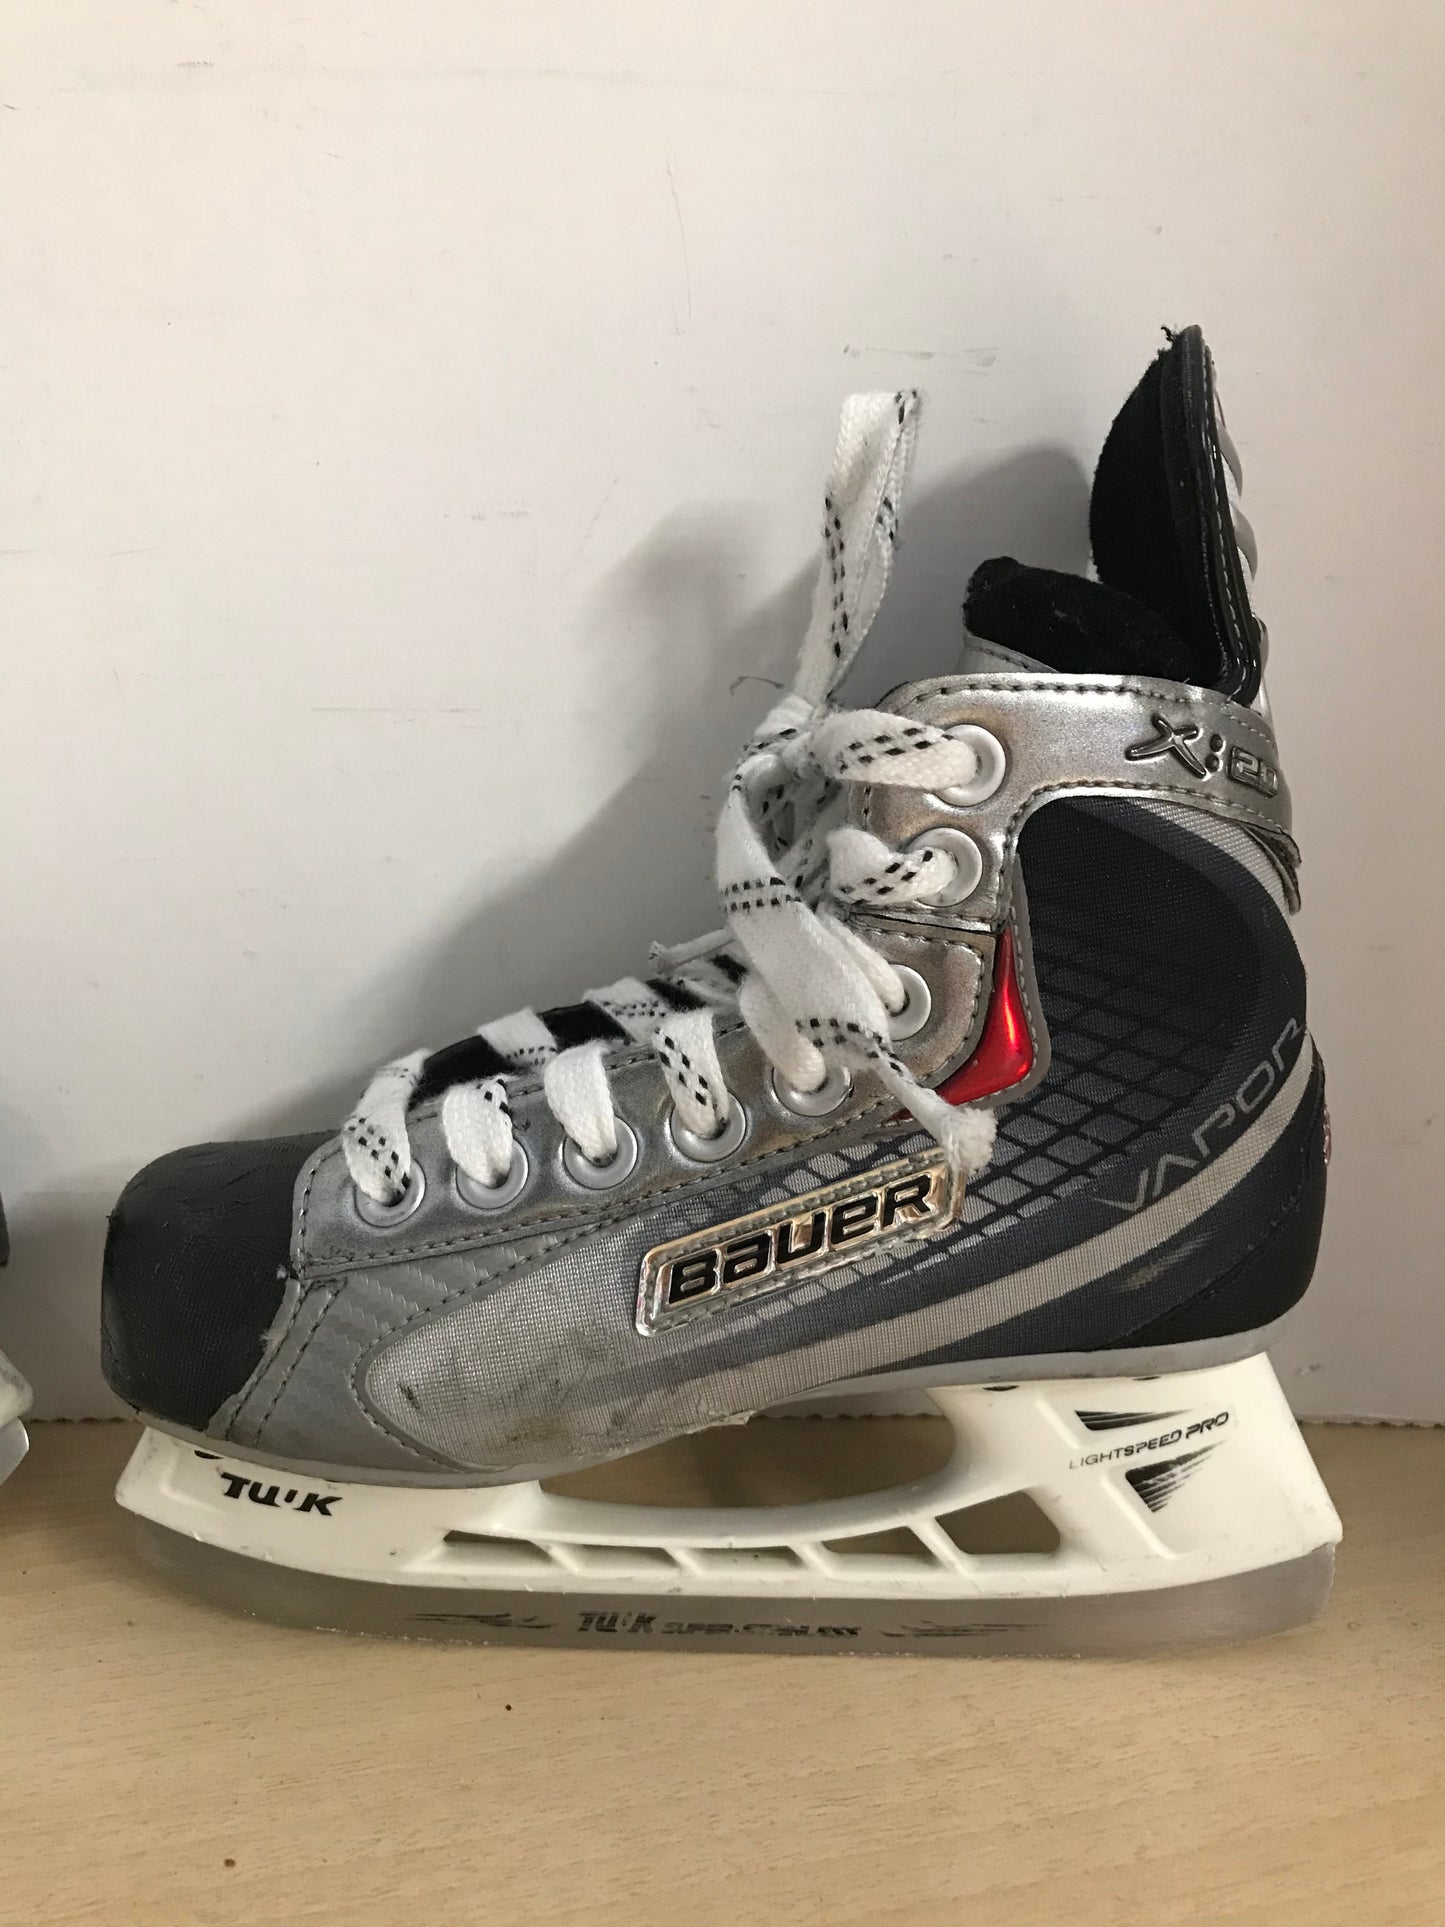 Hockey Skates Child Size 1 Shoe Size Bauer Vapor X.20 Minor Marks Wear